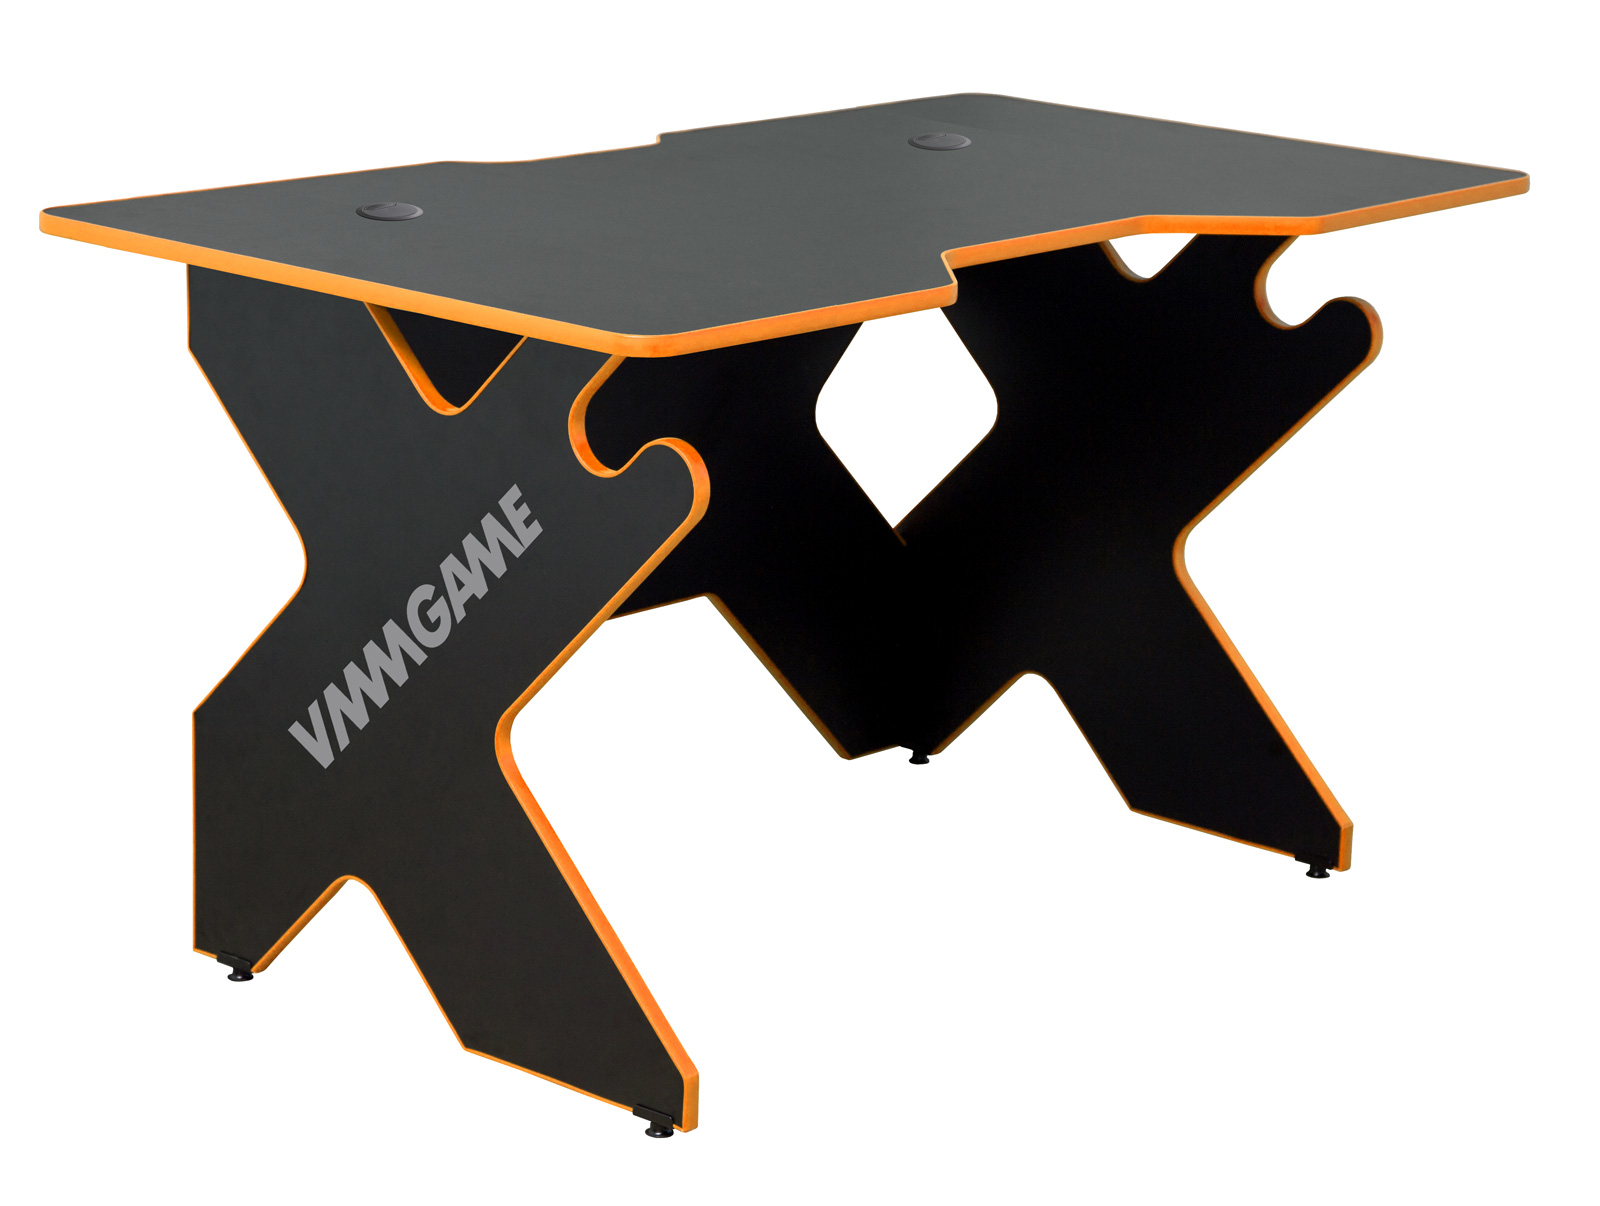 Игровой компьютерный стол vmmgame space dark 140 orange st-3boe